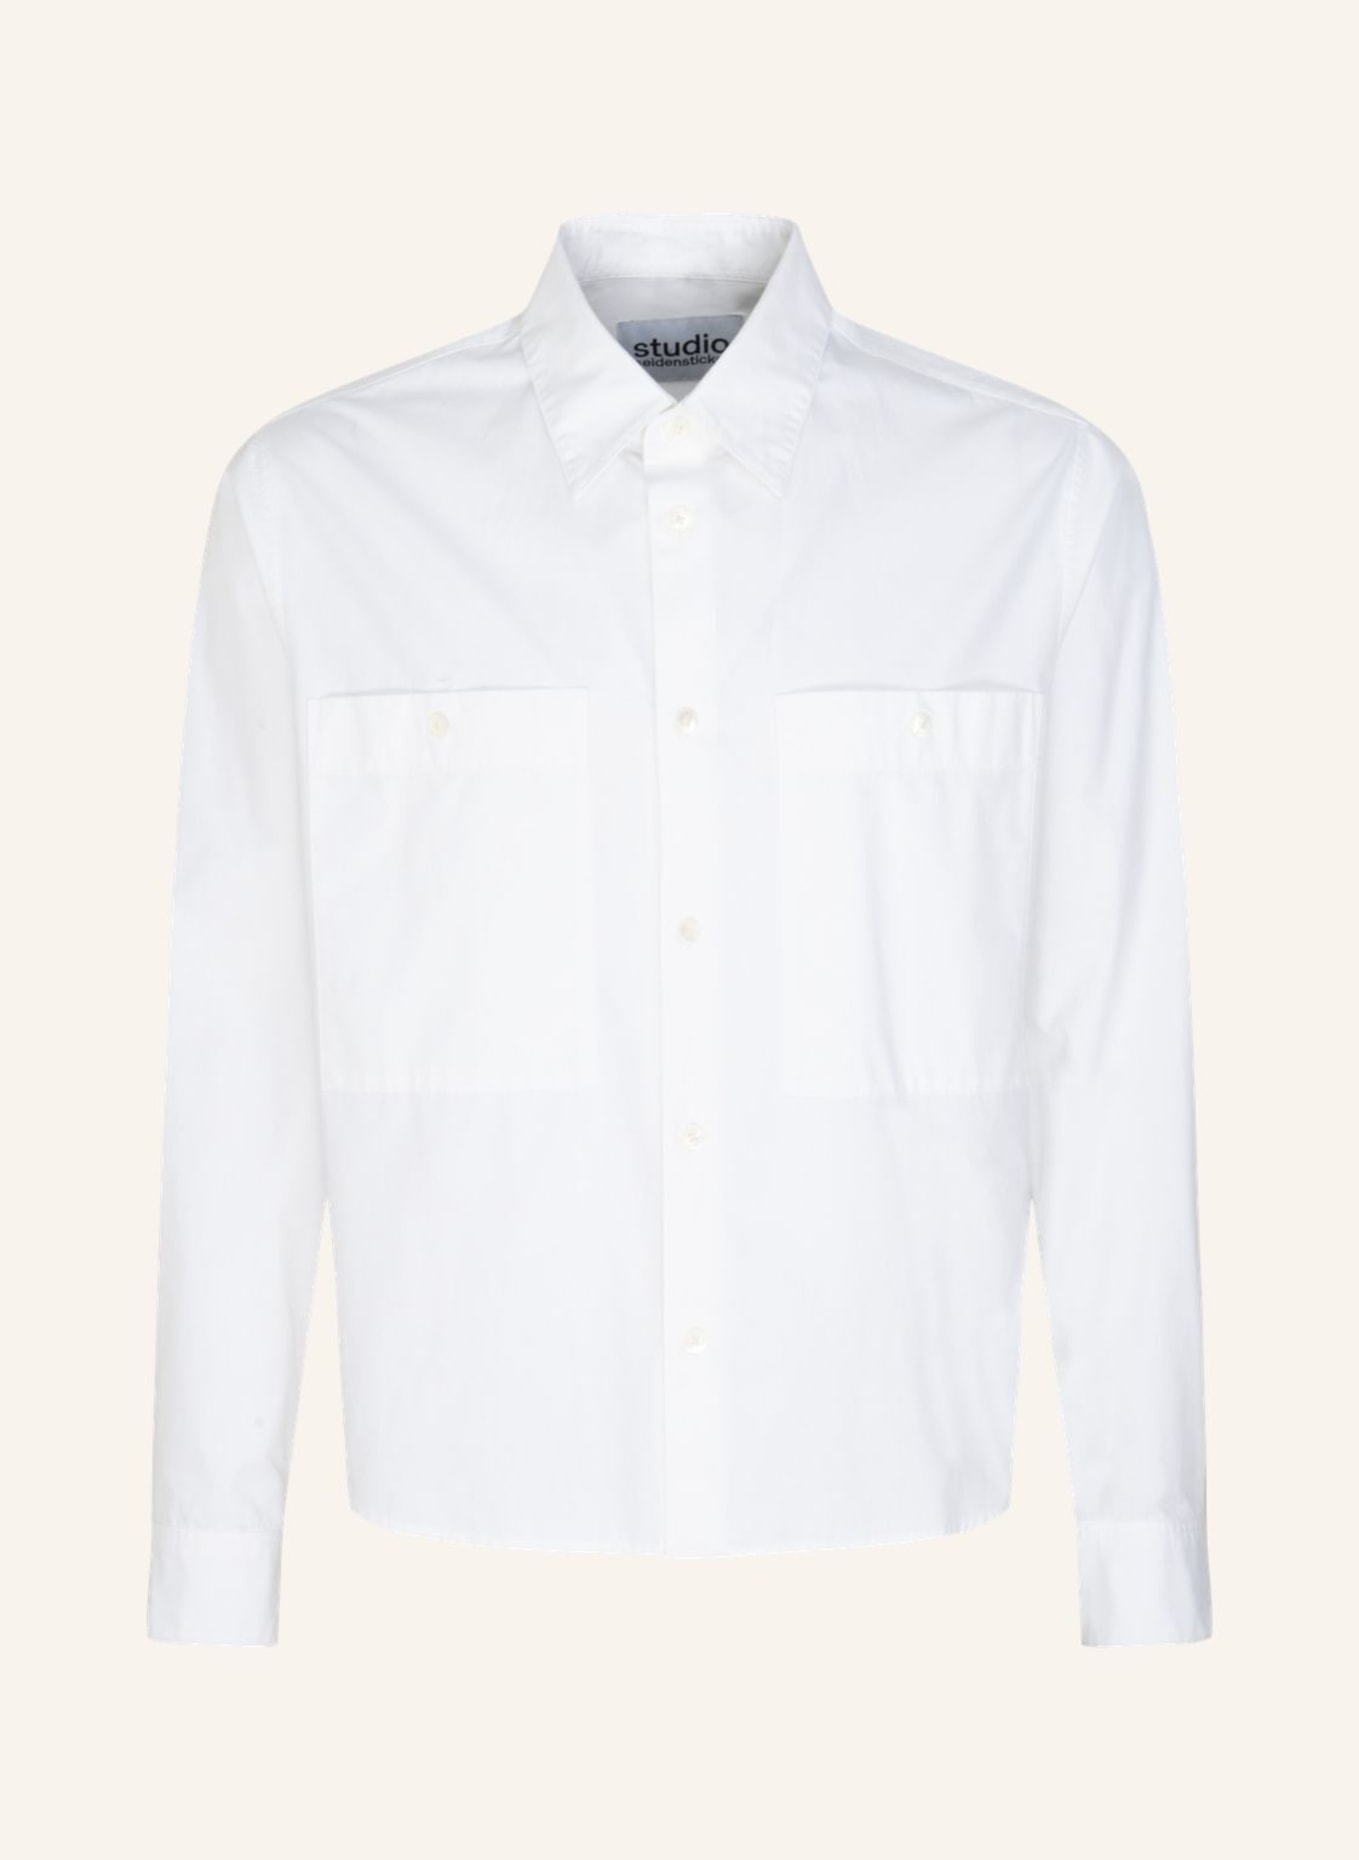 studio seidensticker Hemd, Casual Hemd Regular Fit, Farbe: WEISS (Bild 1)